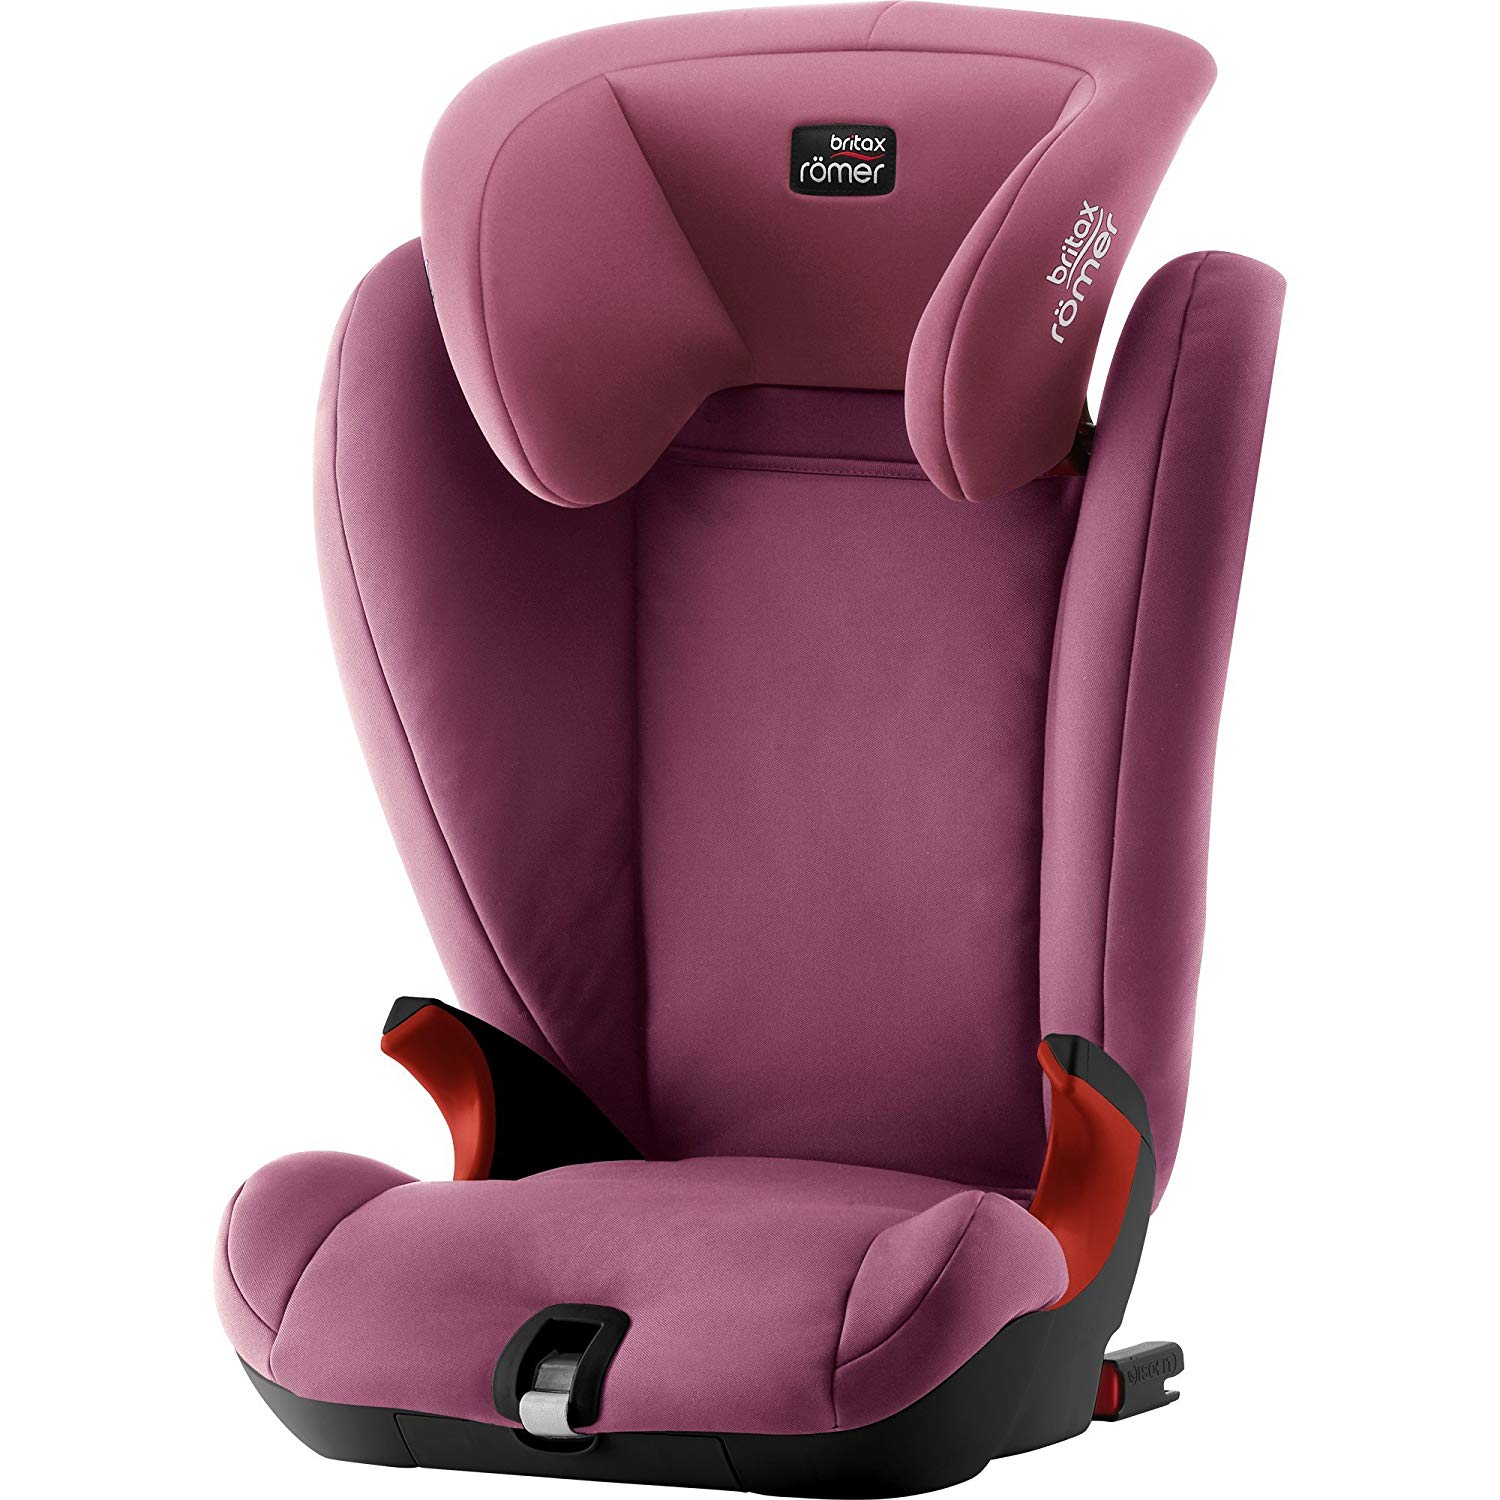 Britax Römer Kidfix SL SICT Child Car Seat Group 2/3, 15 - 36 kg. without SICT